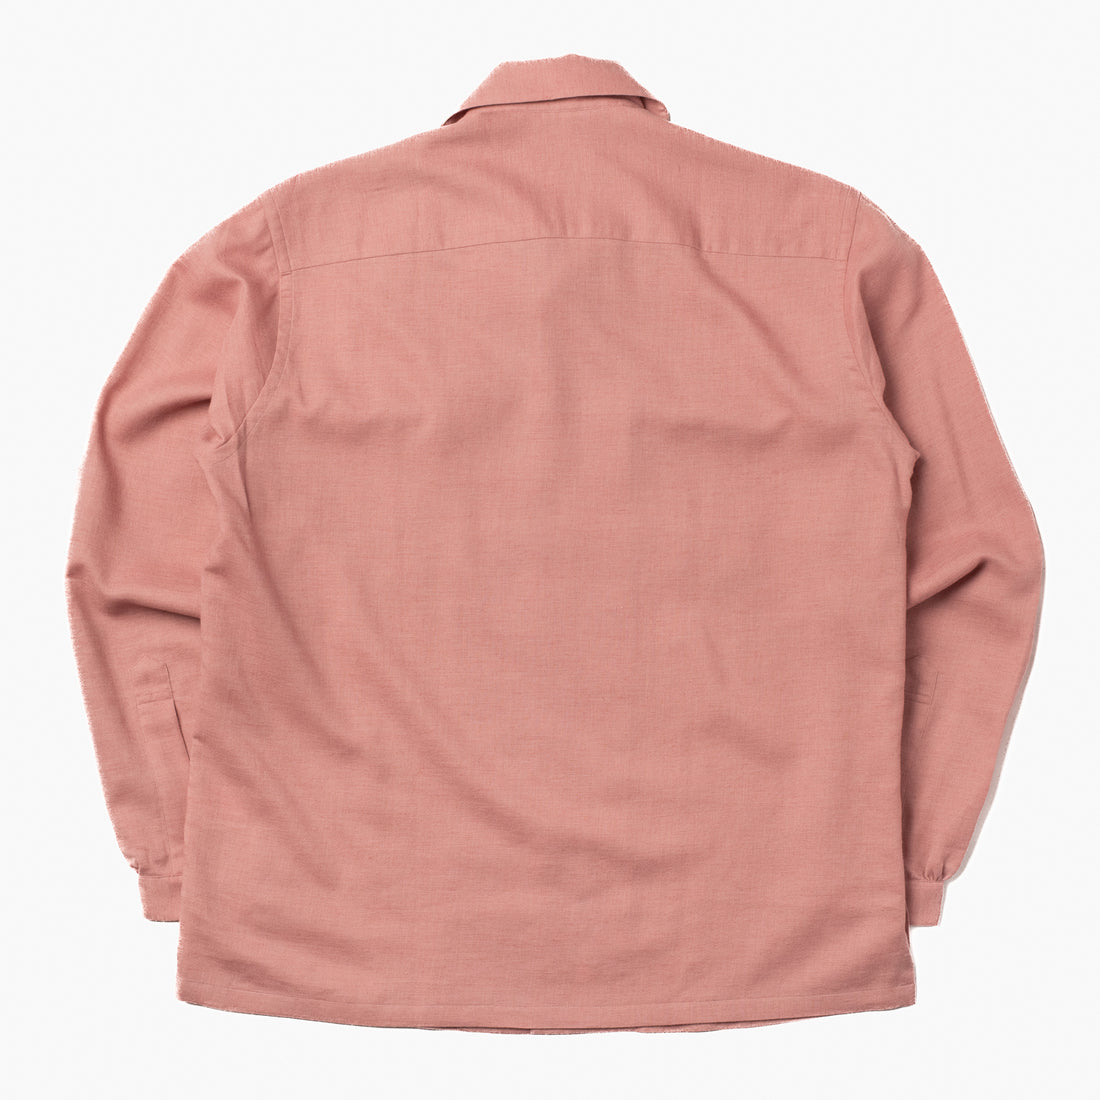 Bryceland's Viyella Sports Shirt Dusty Pink